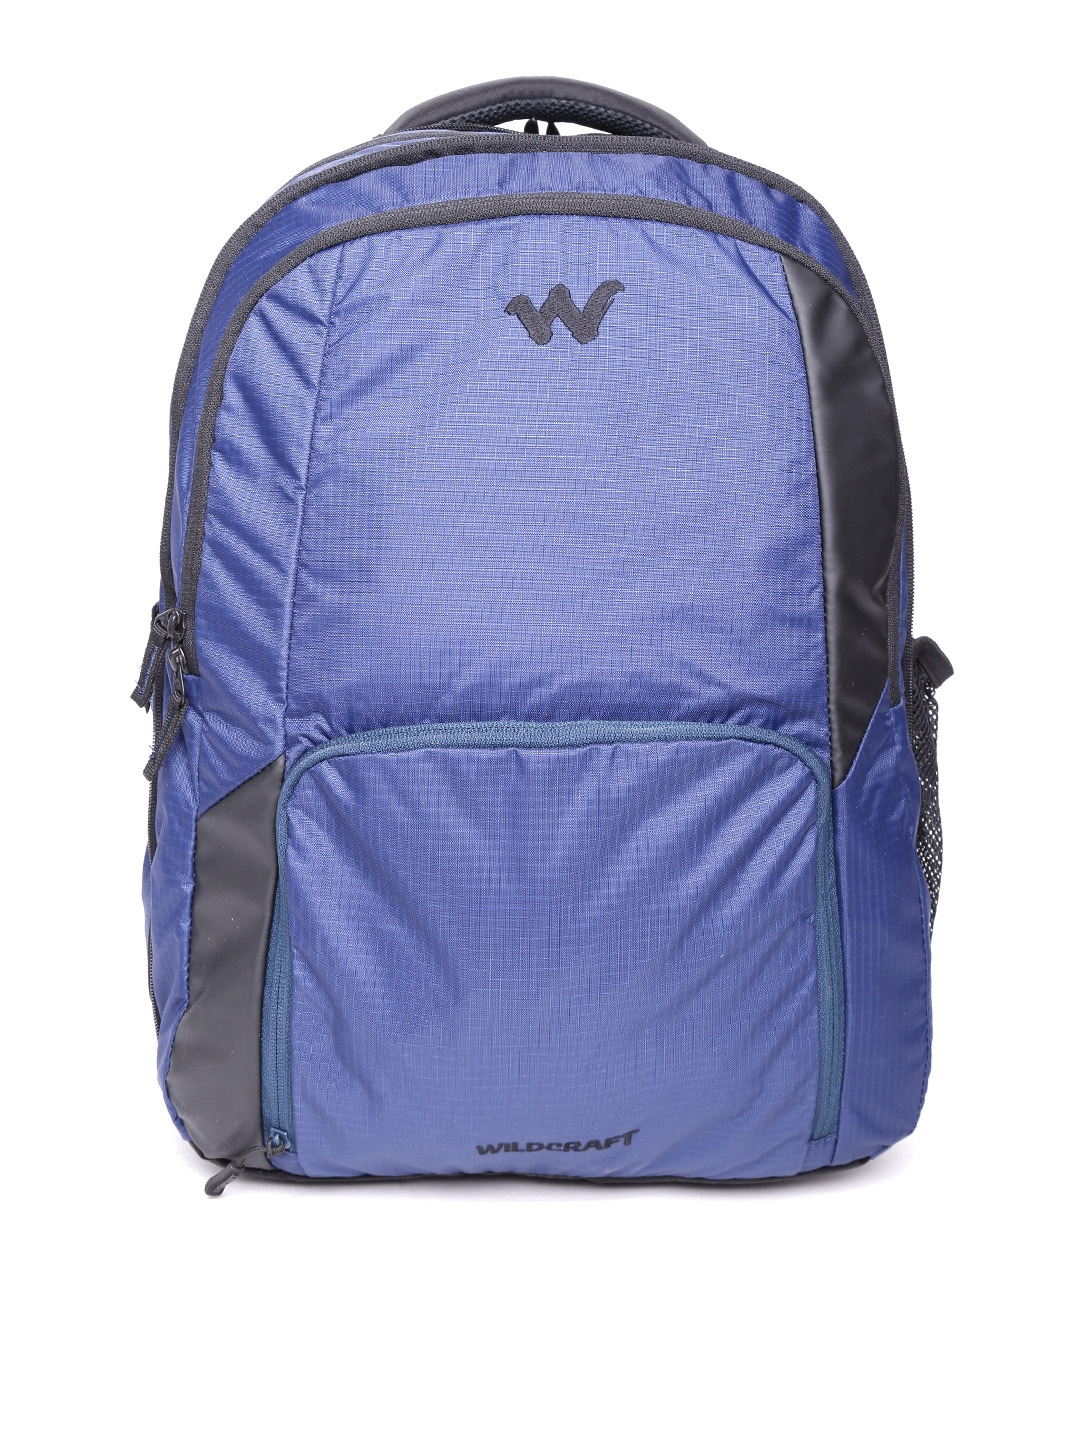 Wildcraft Unisex Blue Geek 3.1 Solid Backpack Price in India